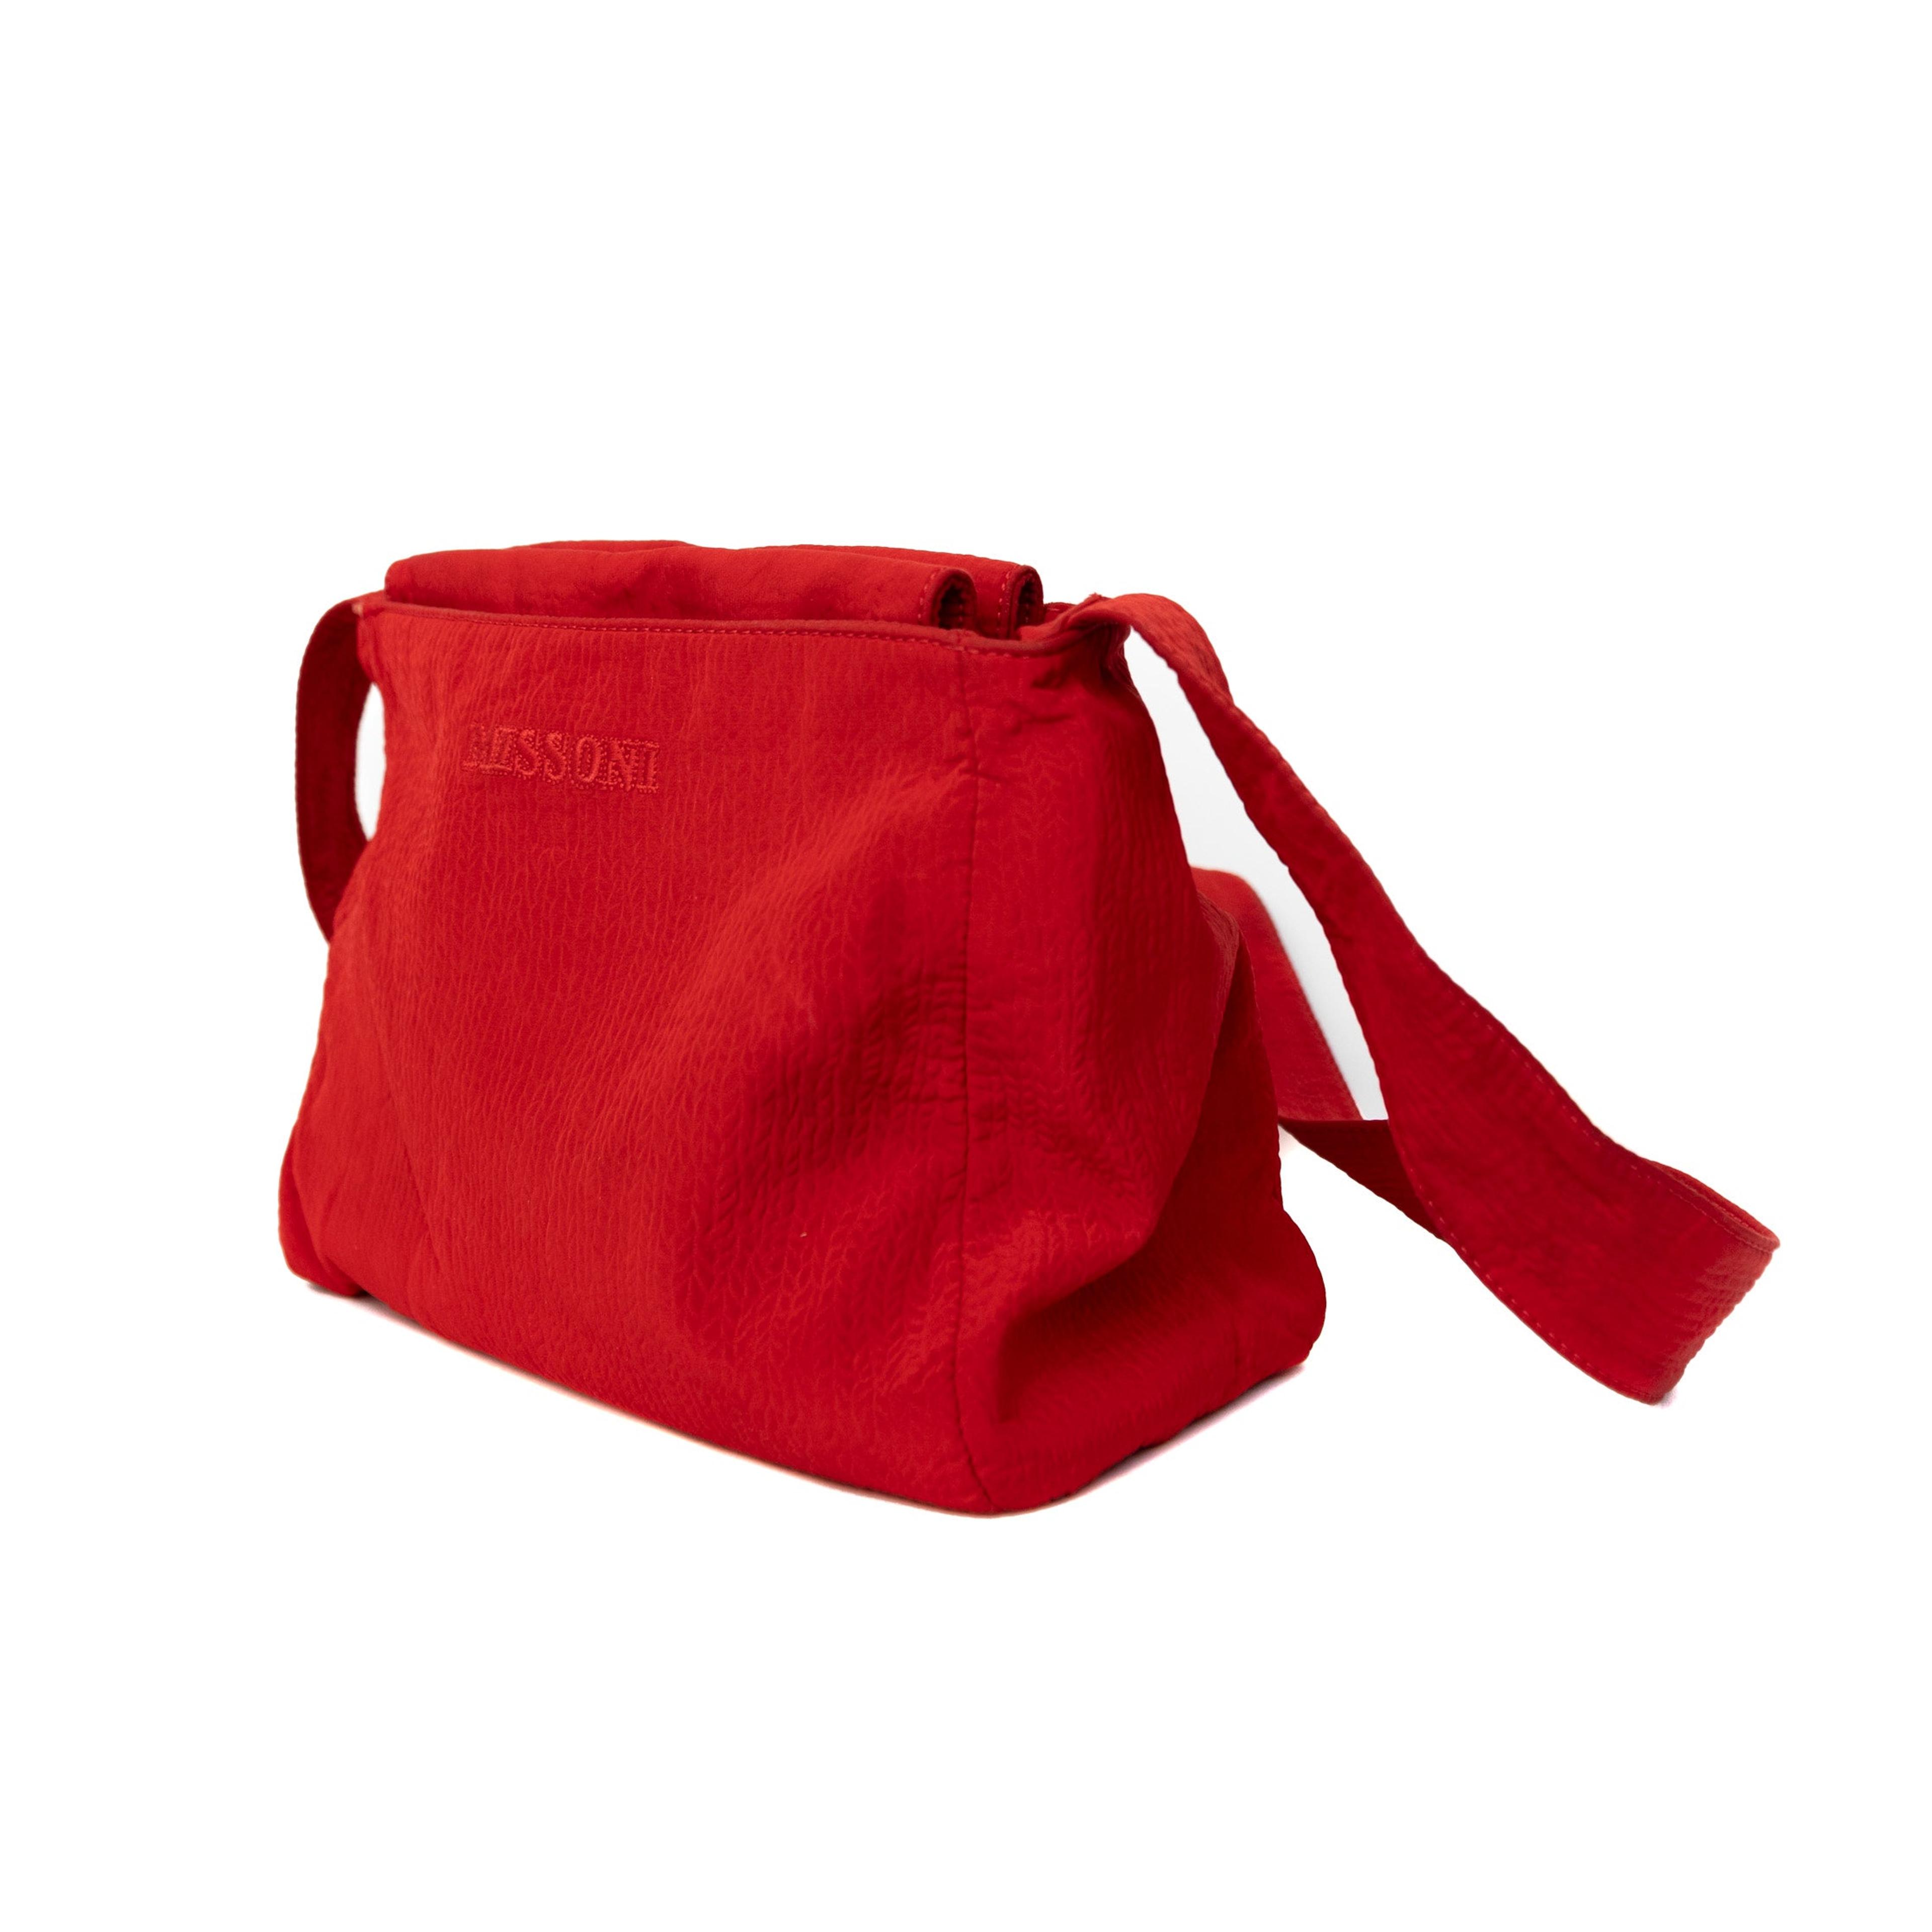 Alternate View 2 of Missoni Red Soft Cross Body Bag